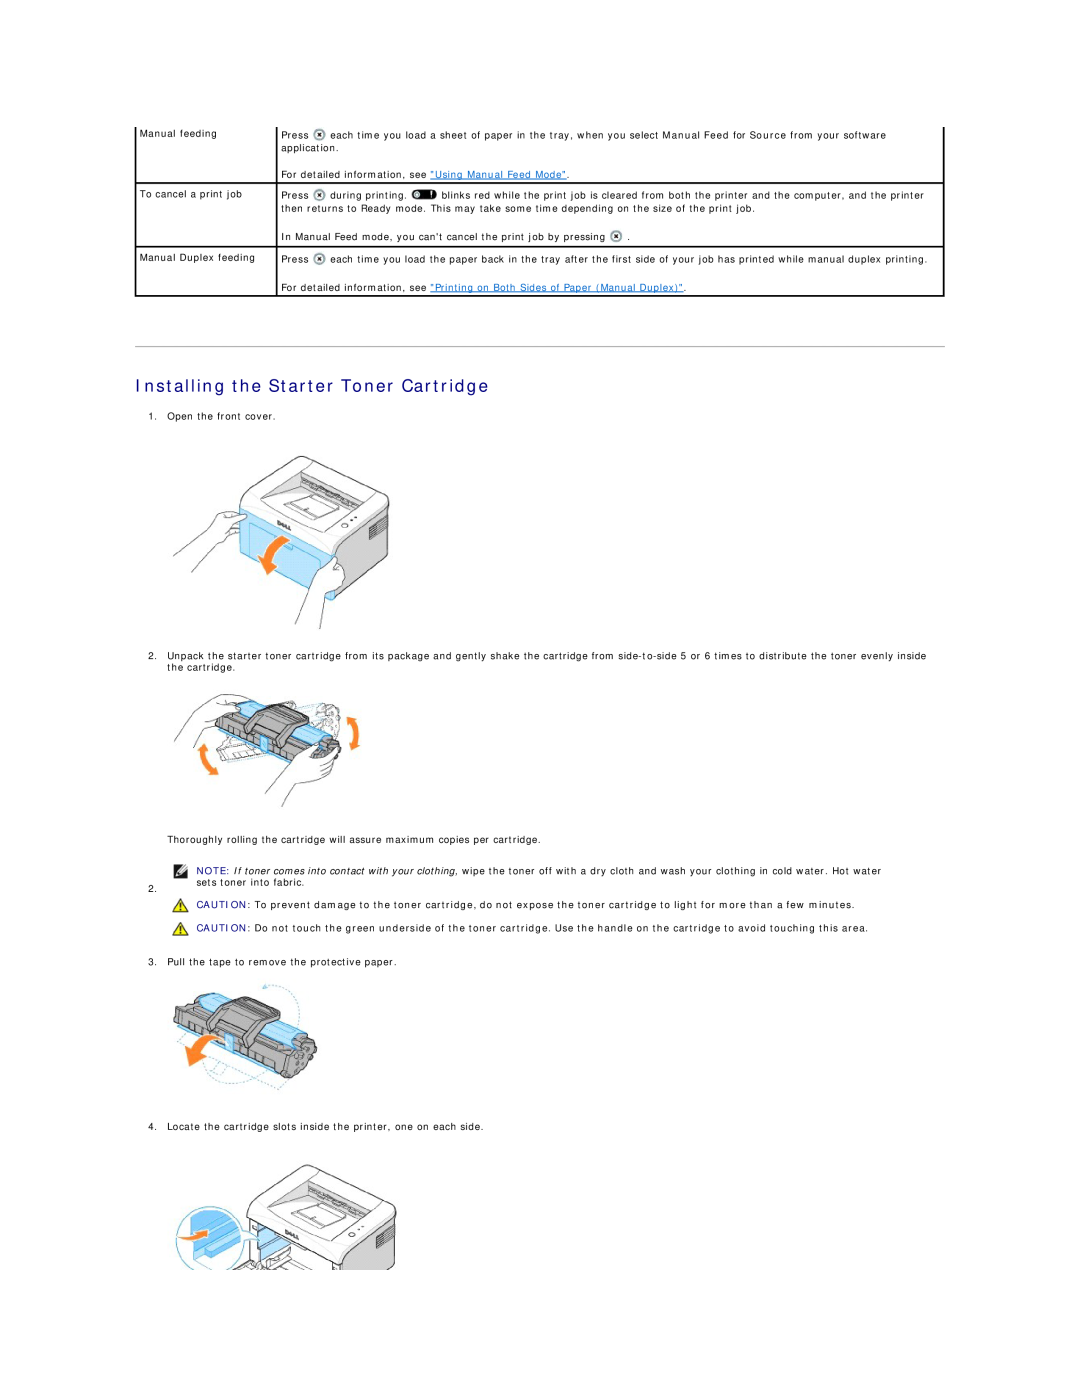 Dell 1100 specifications Installing the Starter Toner Cartridge 